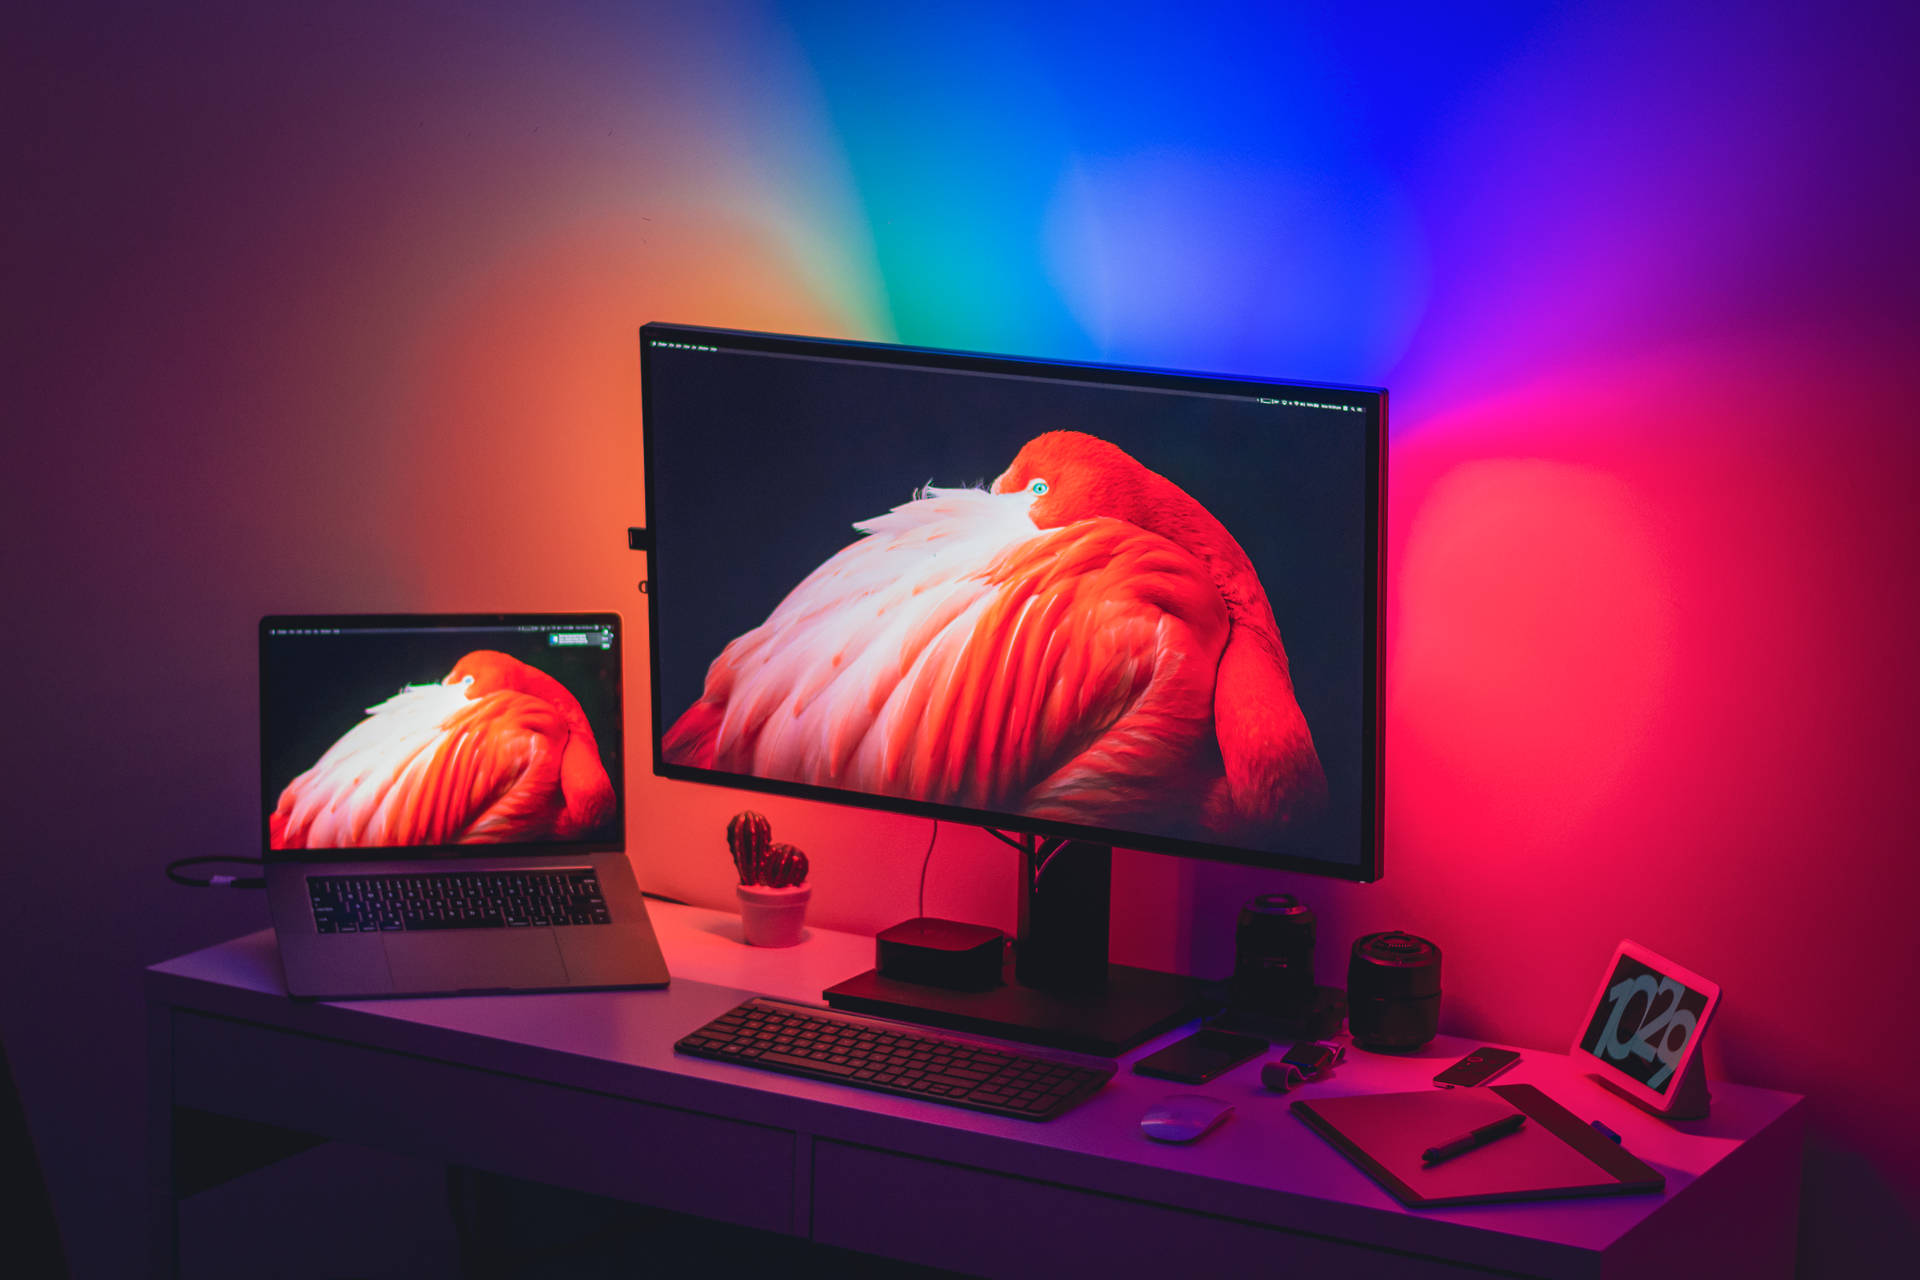 Luxurious Sleek Asus Laptop On Wooden Desk Background